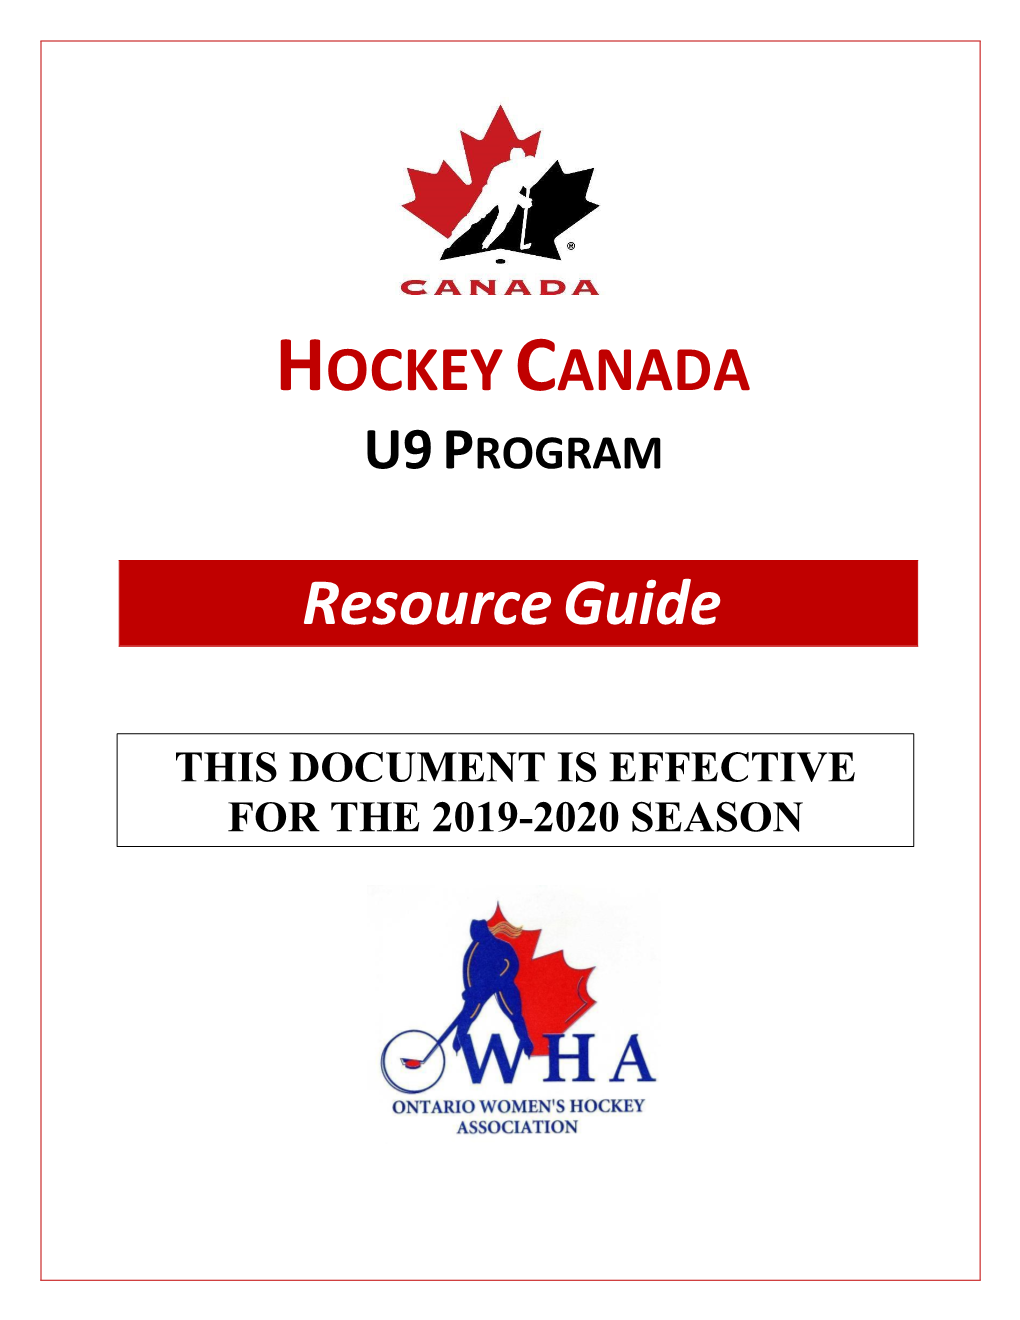 HOCKEY CANADA U9 PROGRAM Resource Guide